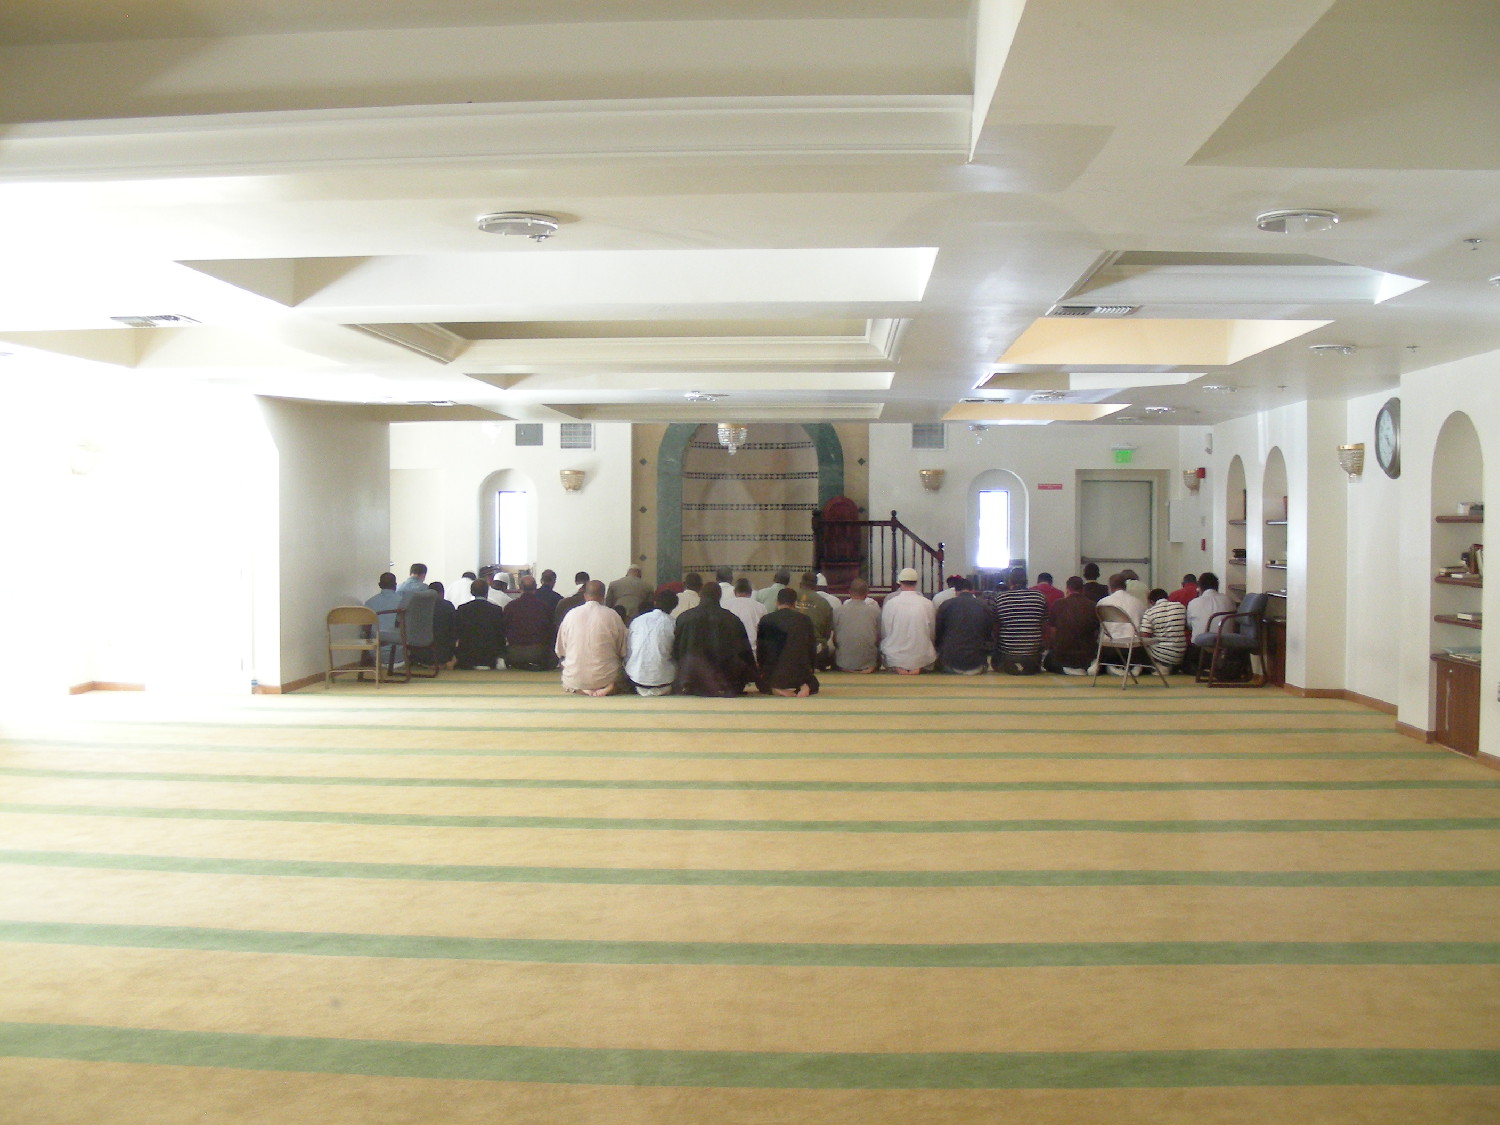 Prayer hall, with men praying